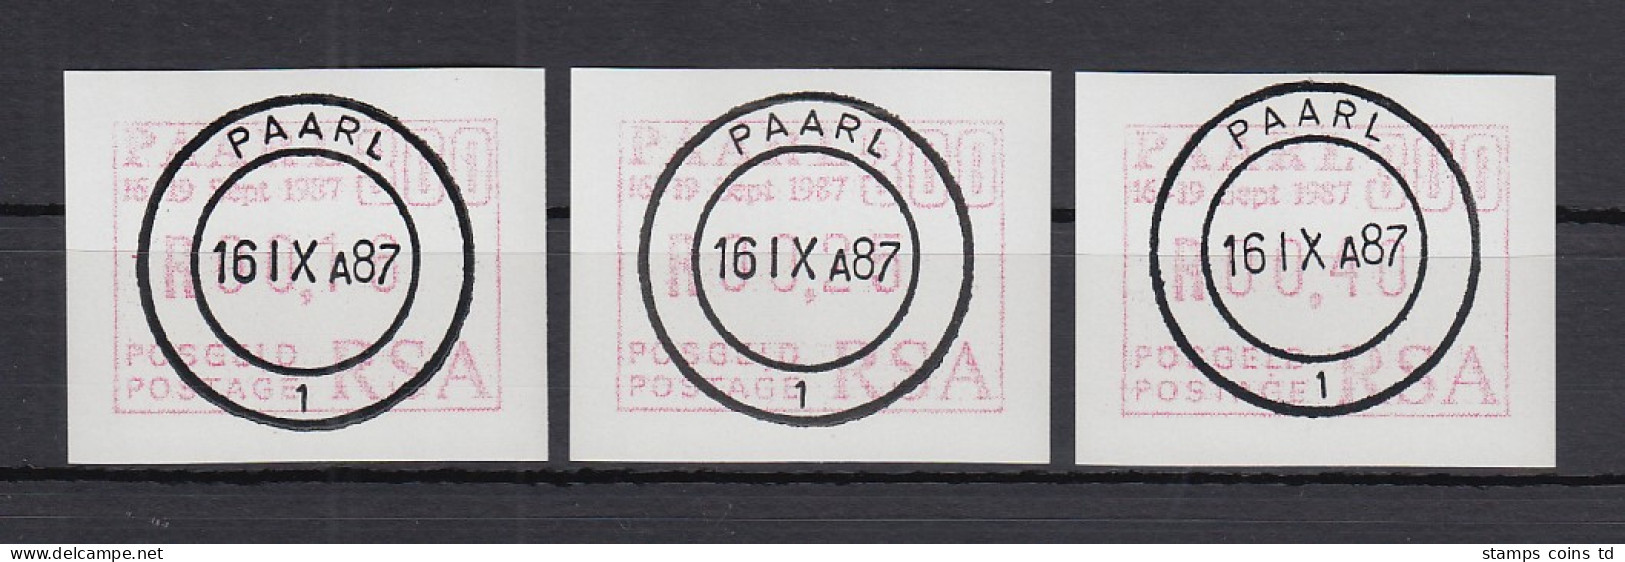 RSA 1987 Sonder-ATM PAARL Mi.-Nr. 4 Satz 16-25-40 Mit Voll-O 16-25-40 - Frankeervignetten (Frama)